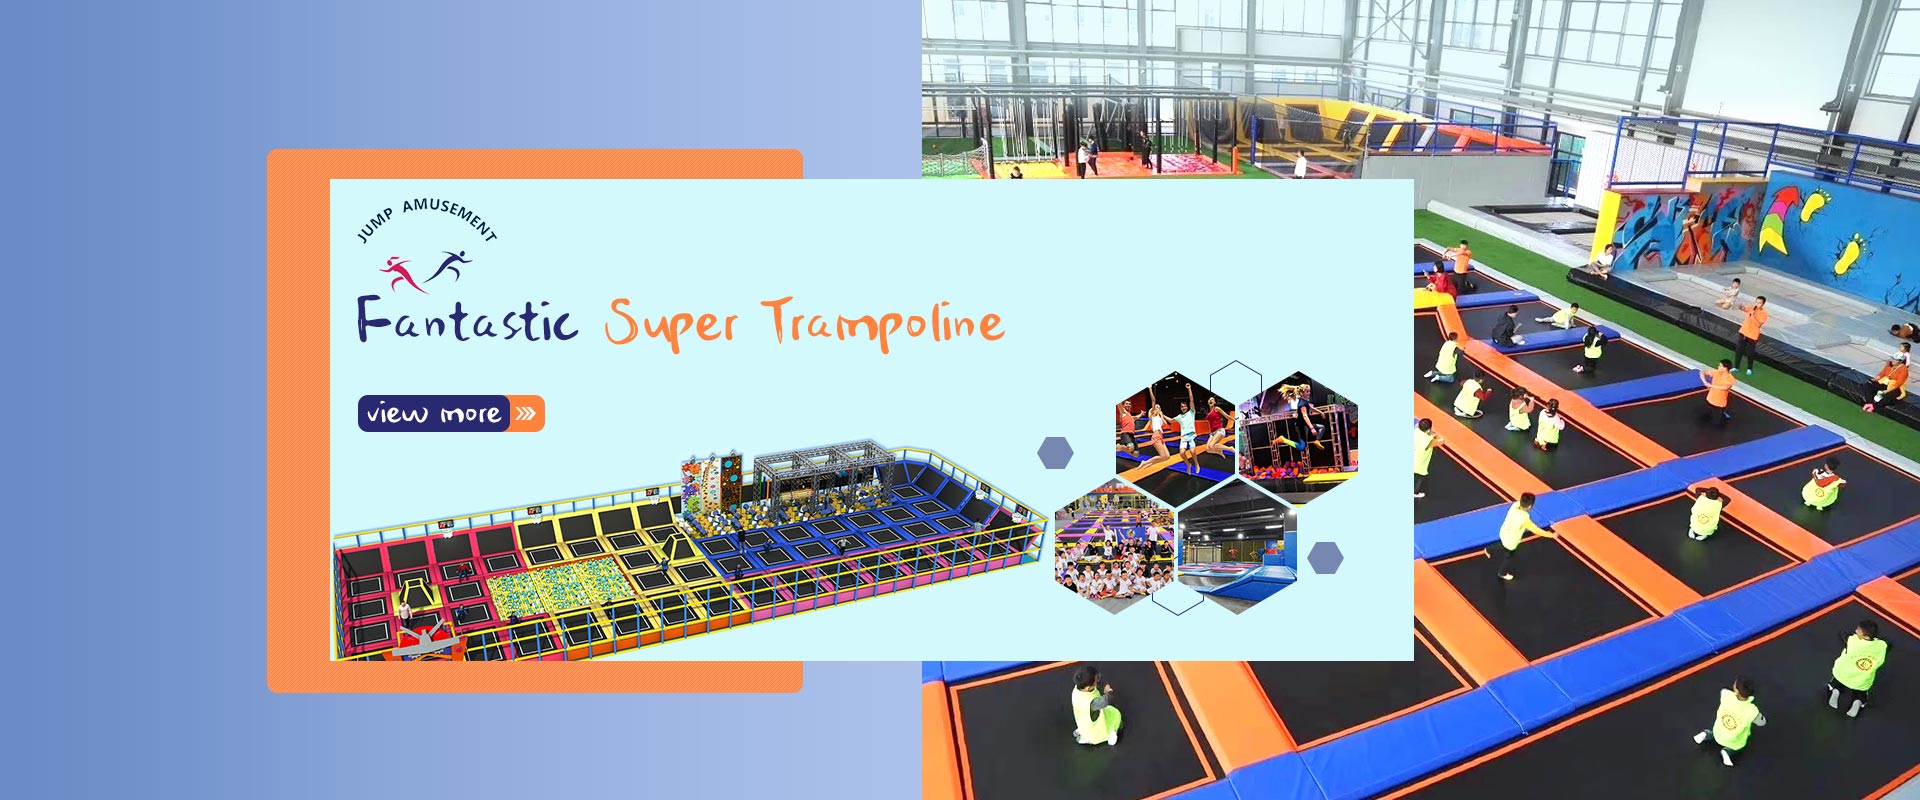 Fantastic Super Trampoline